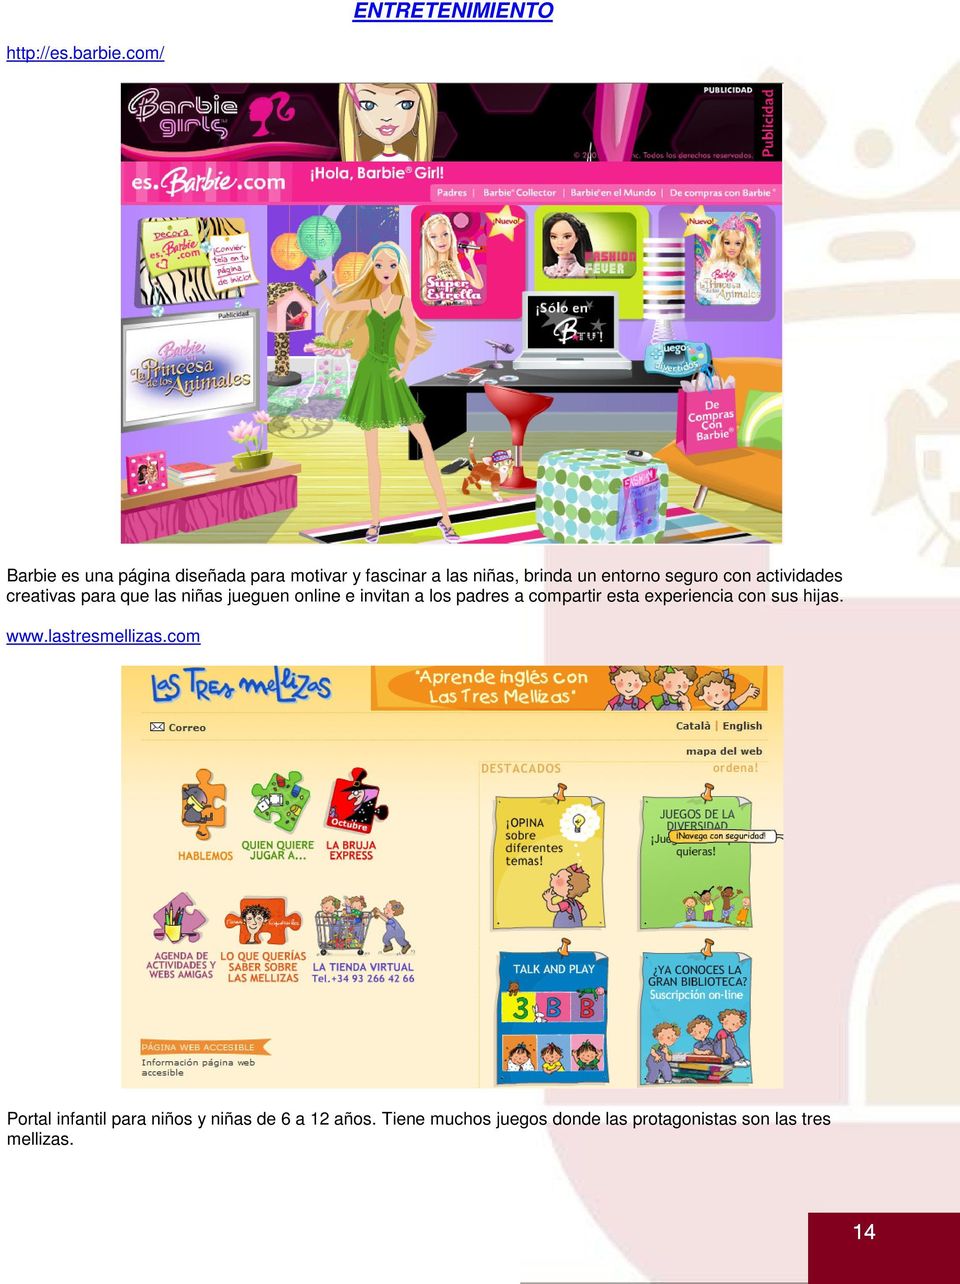 actividades creativas para que las niñas jueguen online e invitan a los padres a compartir esta